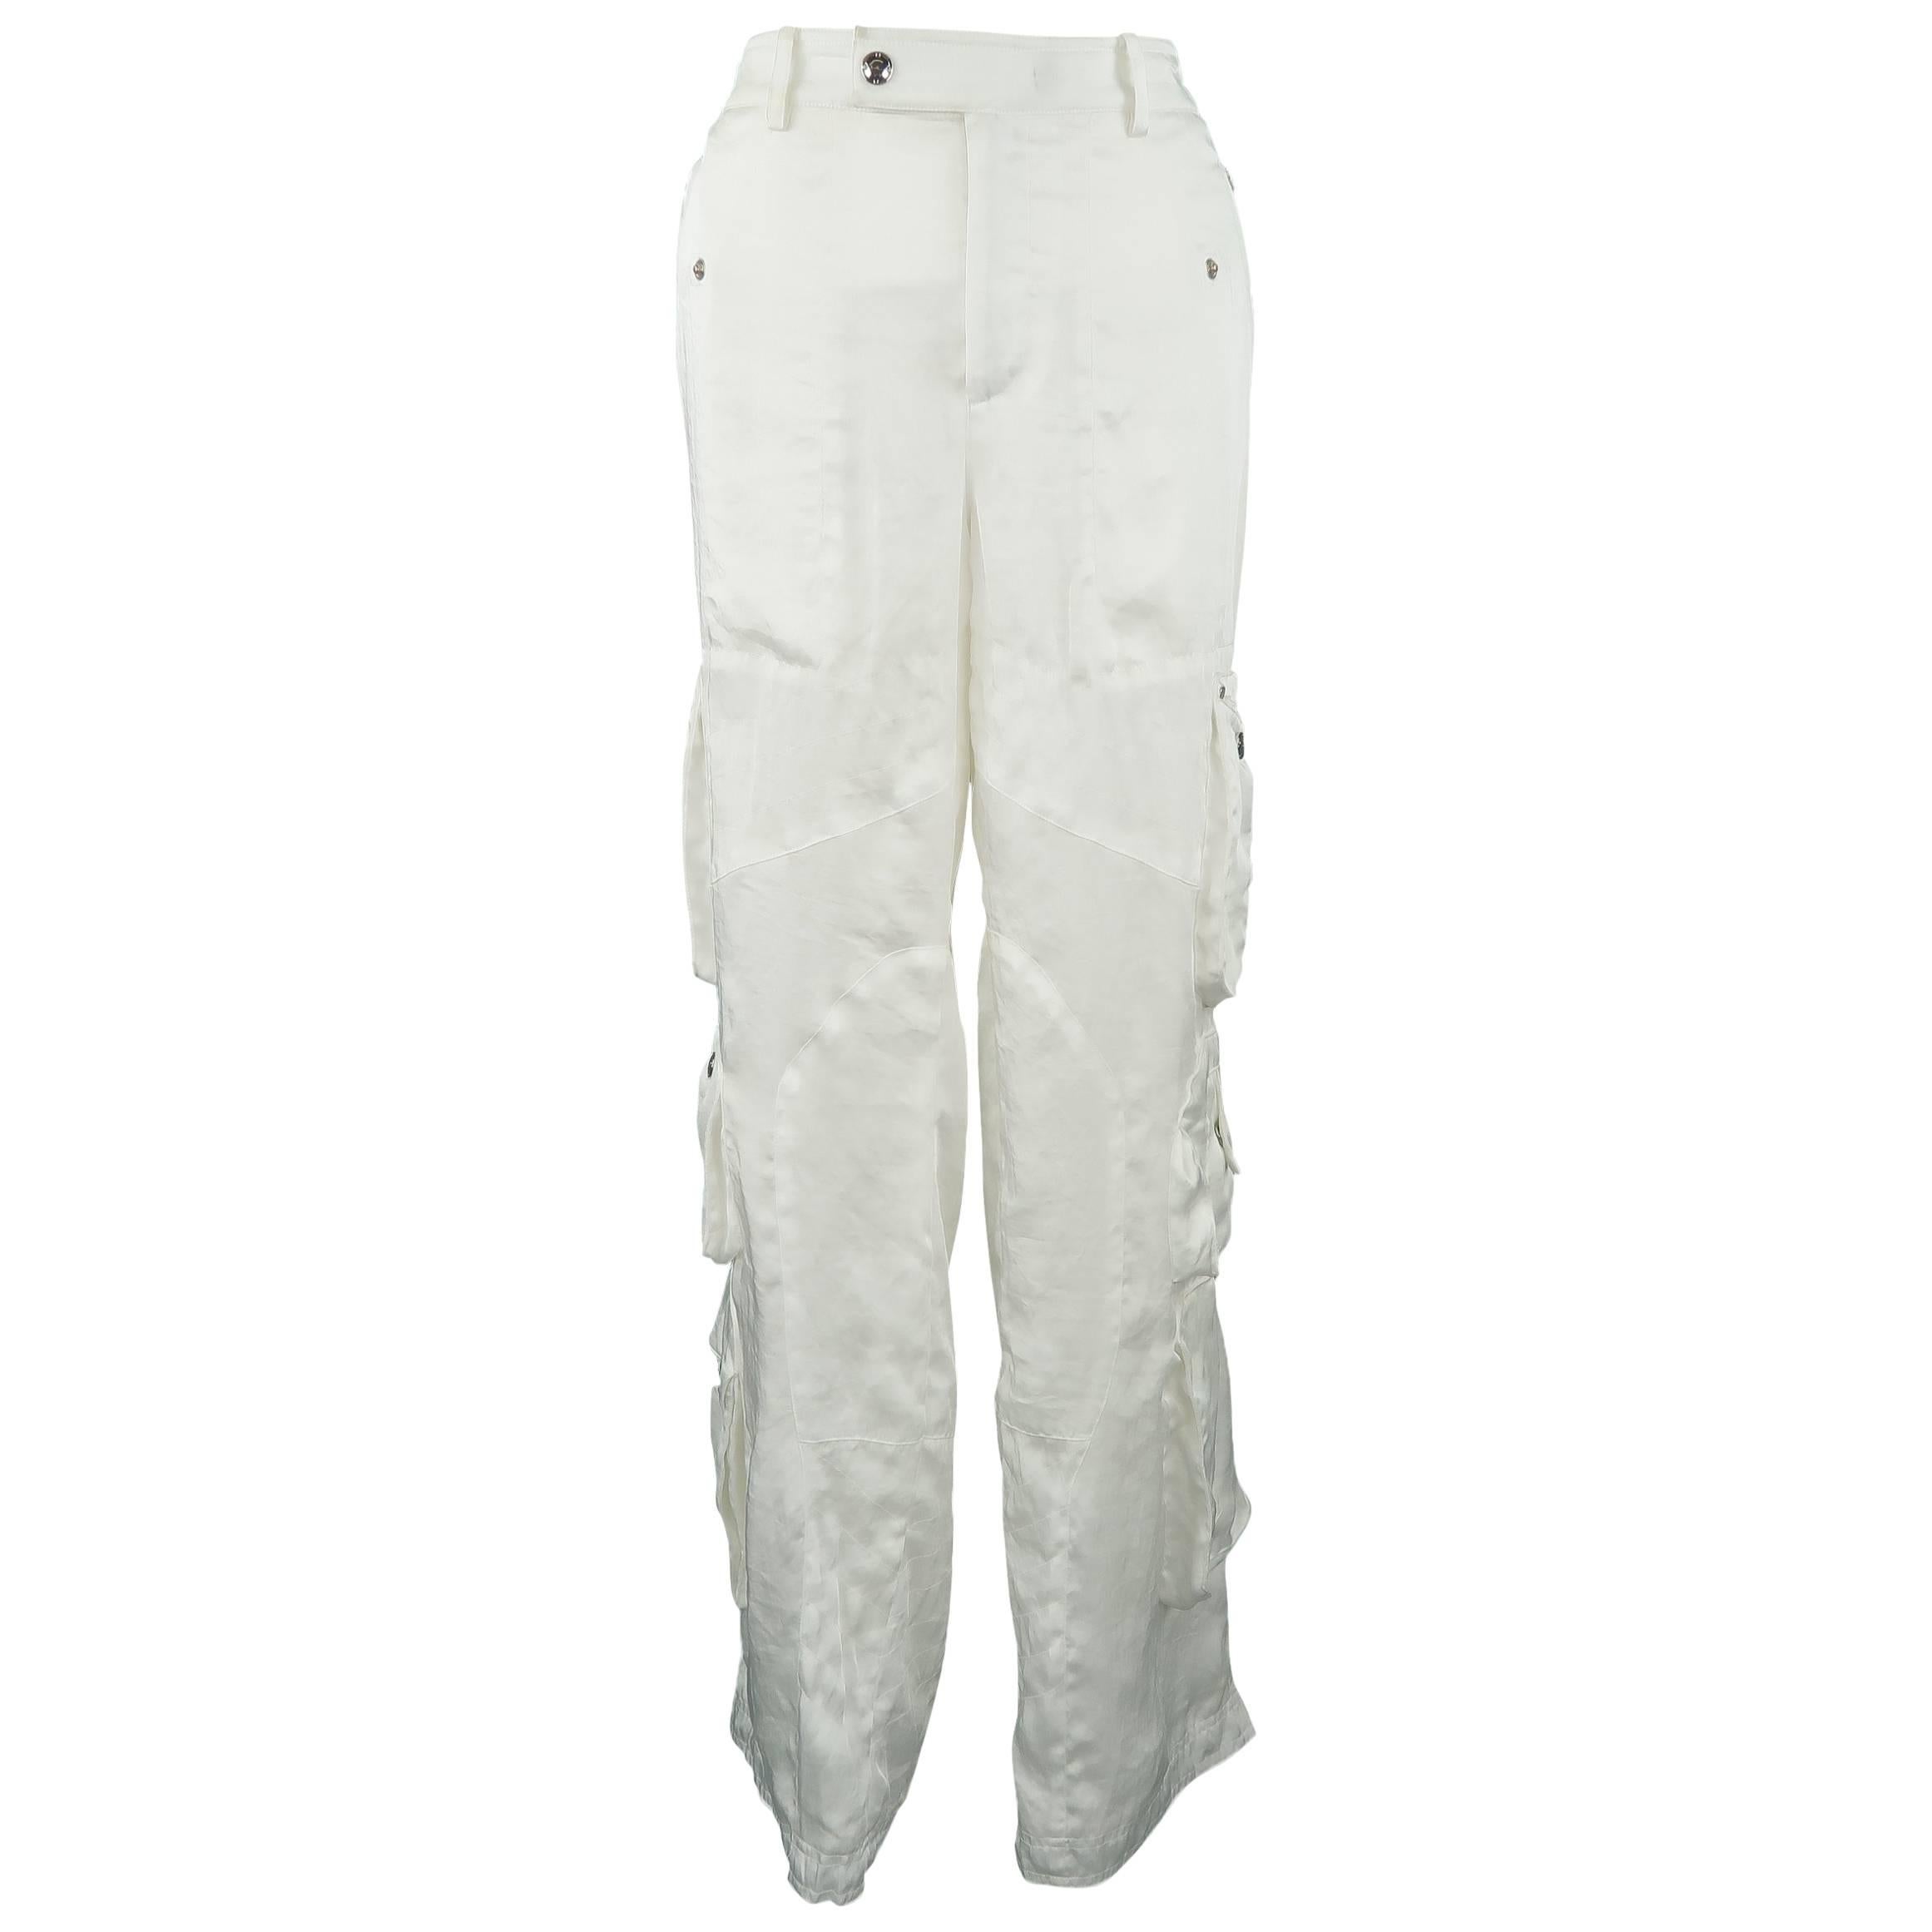 RALPH LAUREN Size 8 White Sheer Satin Cargo Moto Pants